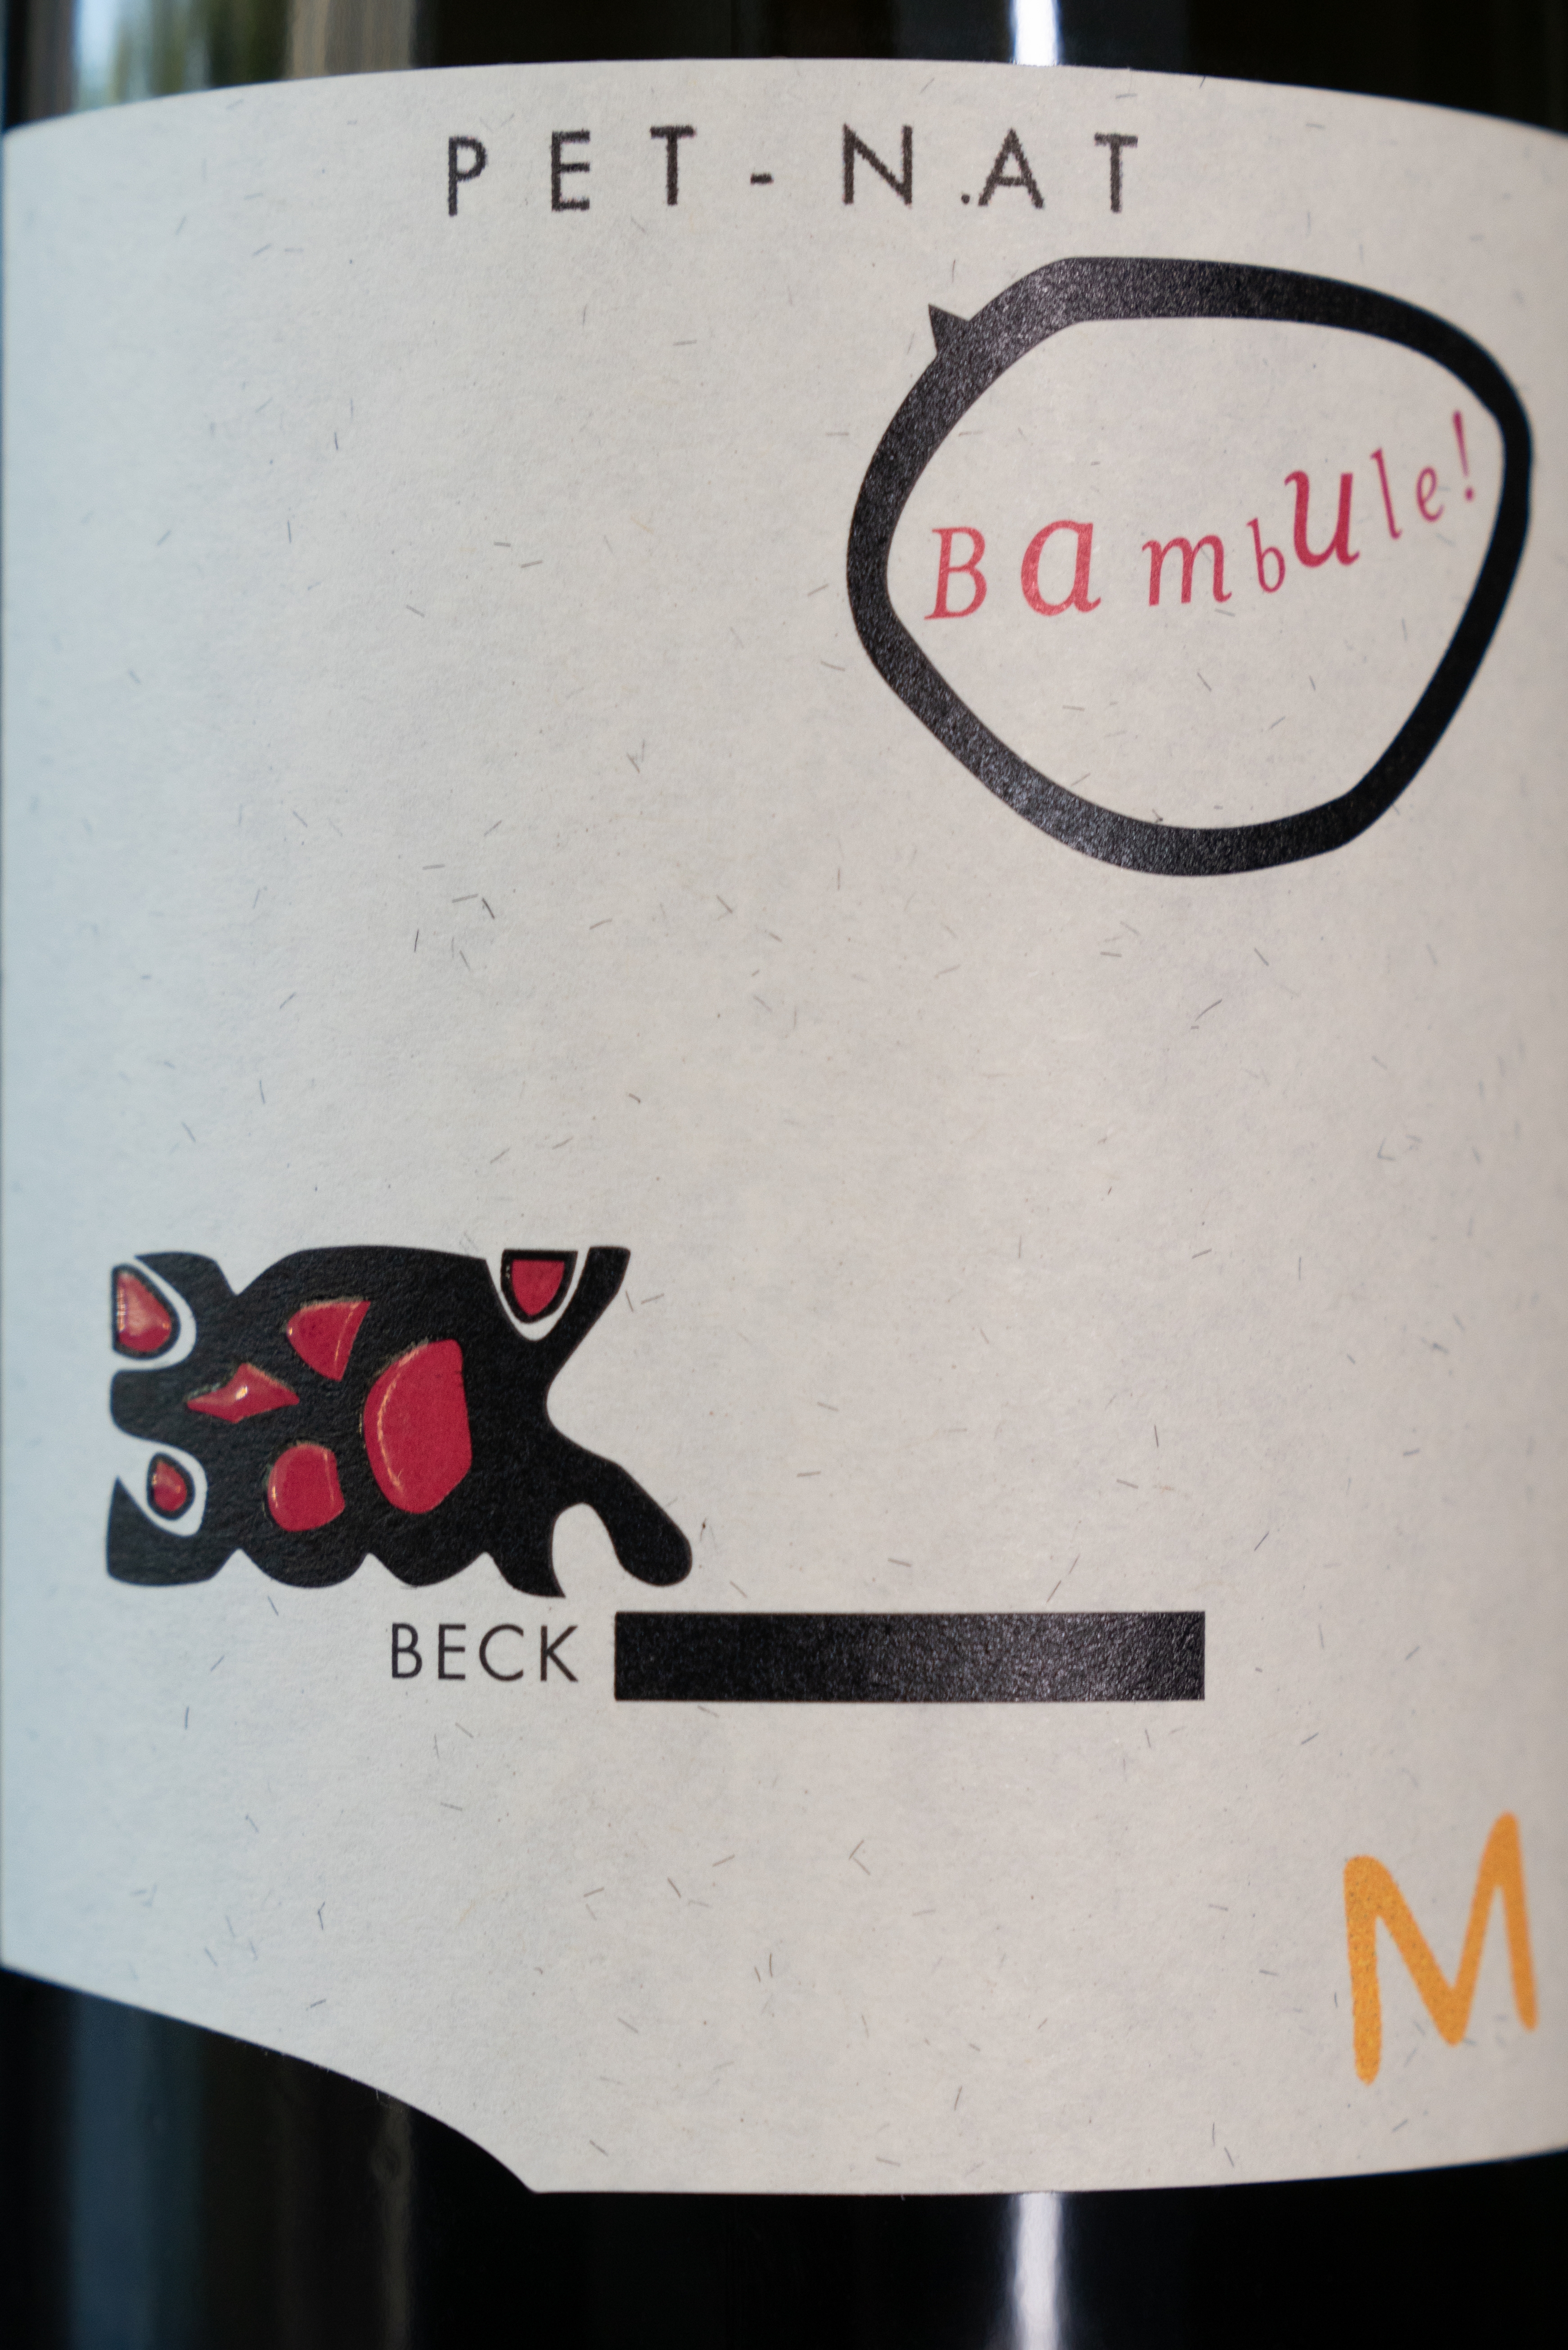 Игристое вино Judith Beck Pet-Nat Bambule М 2020 / Юдит Бек Пет-Нат Бамбуле М 2020